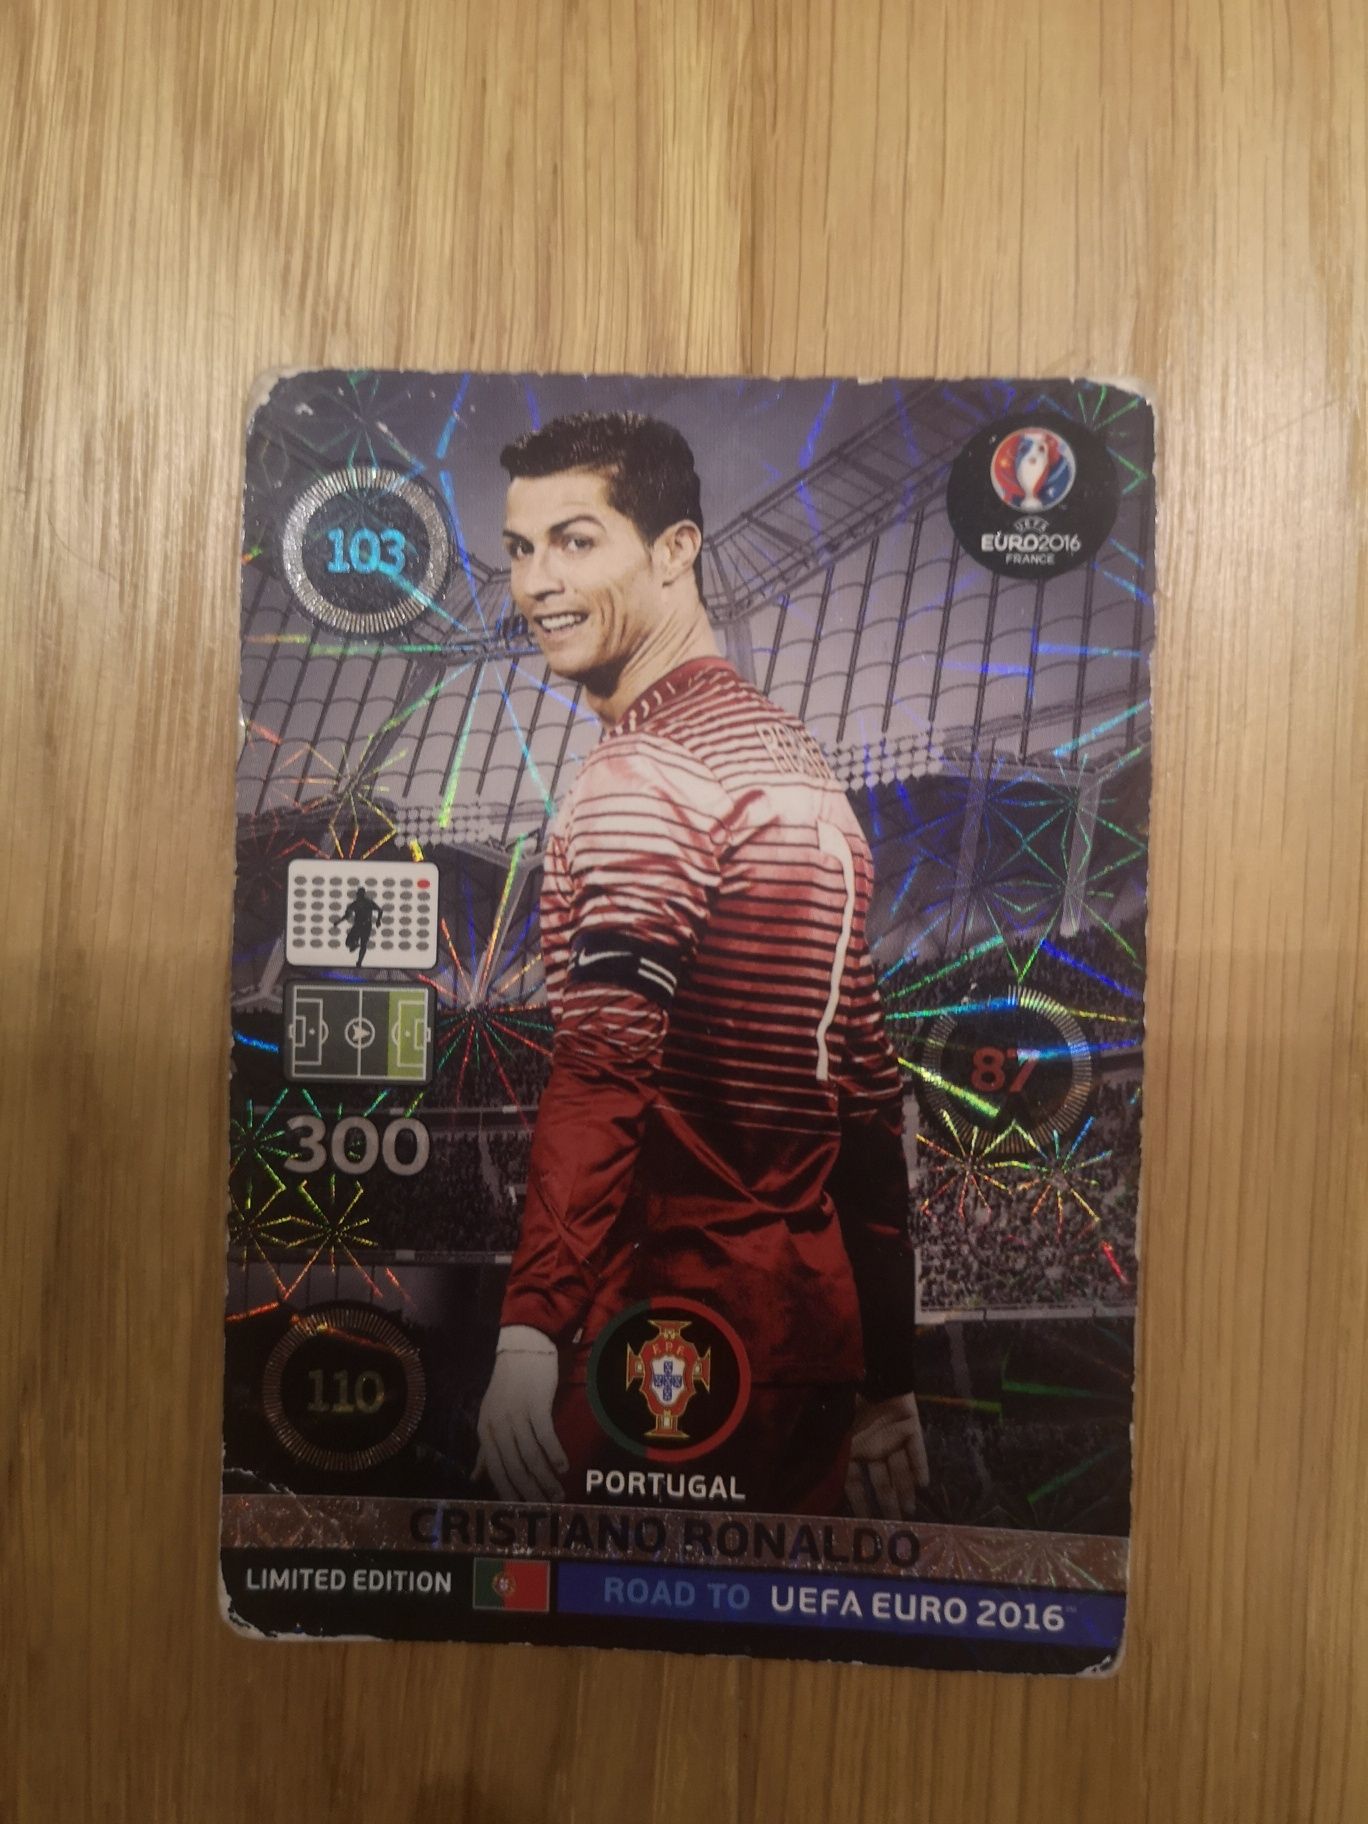 Cristiano Ronaldo limited edition euro2016